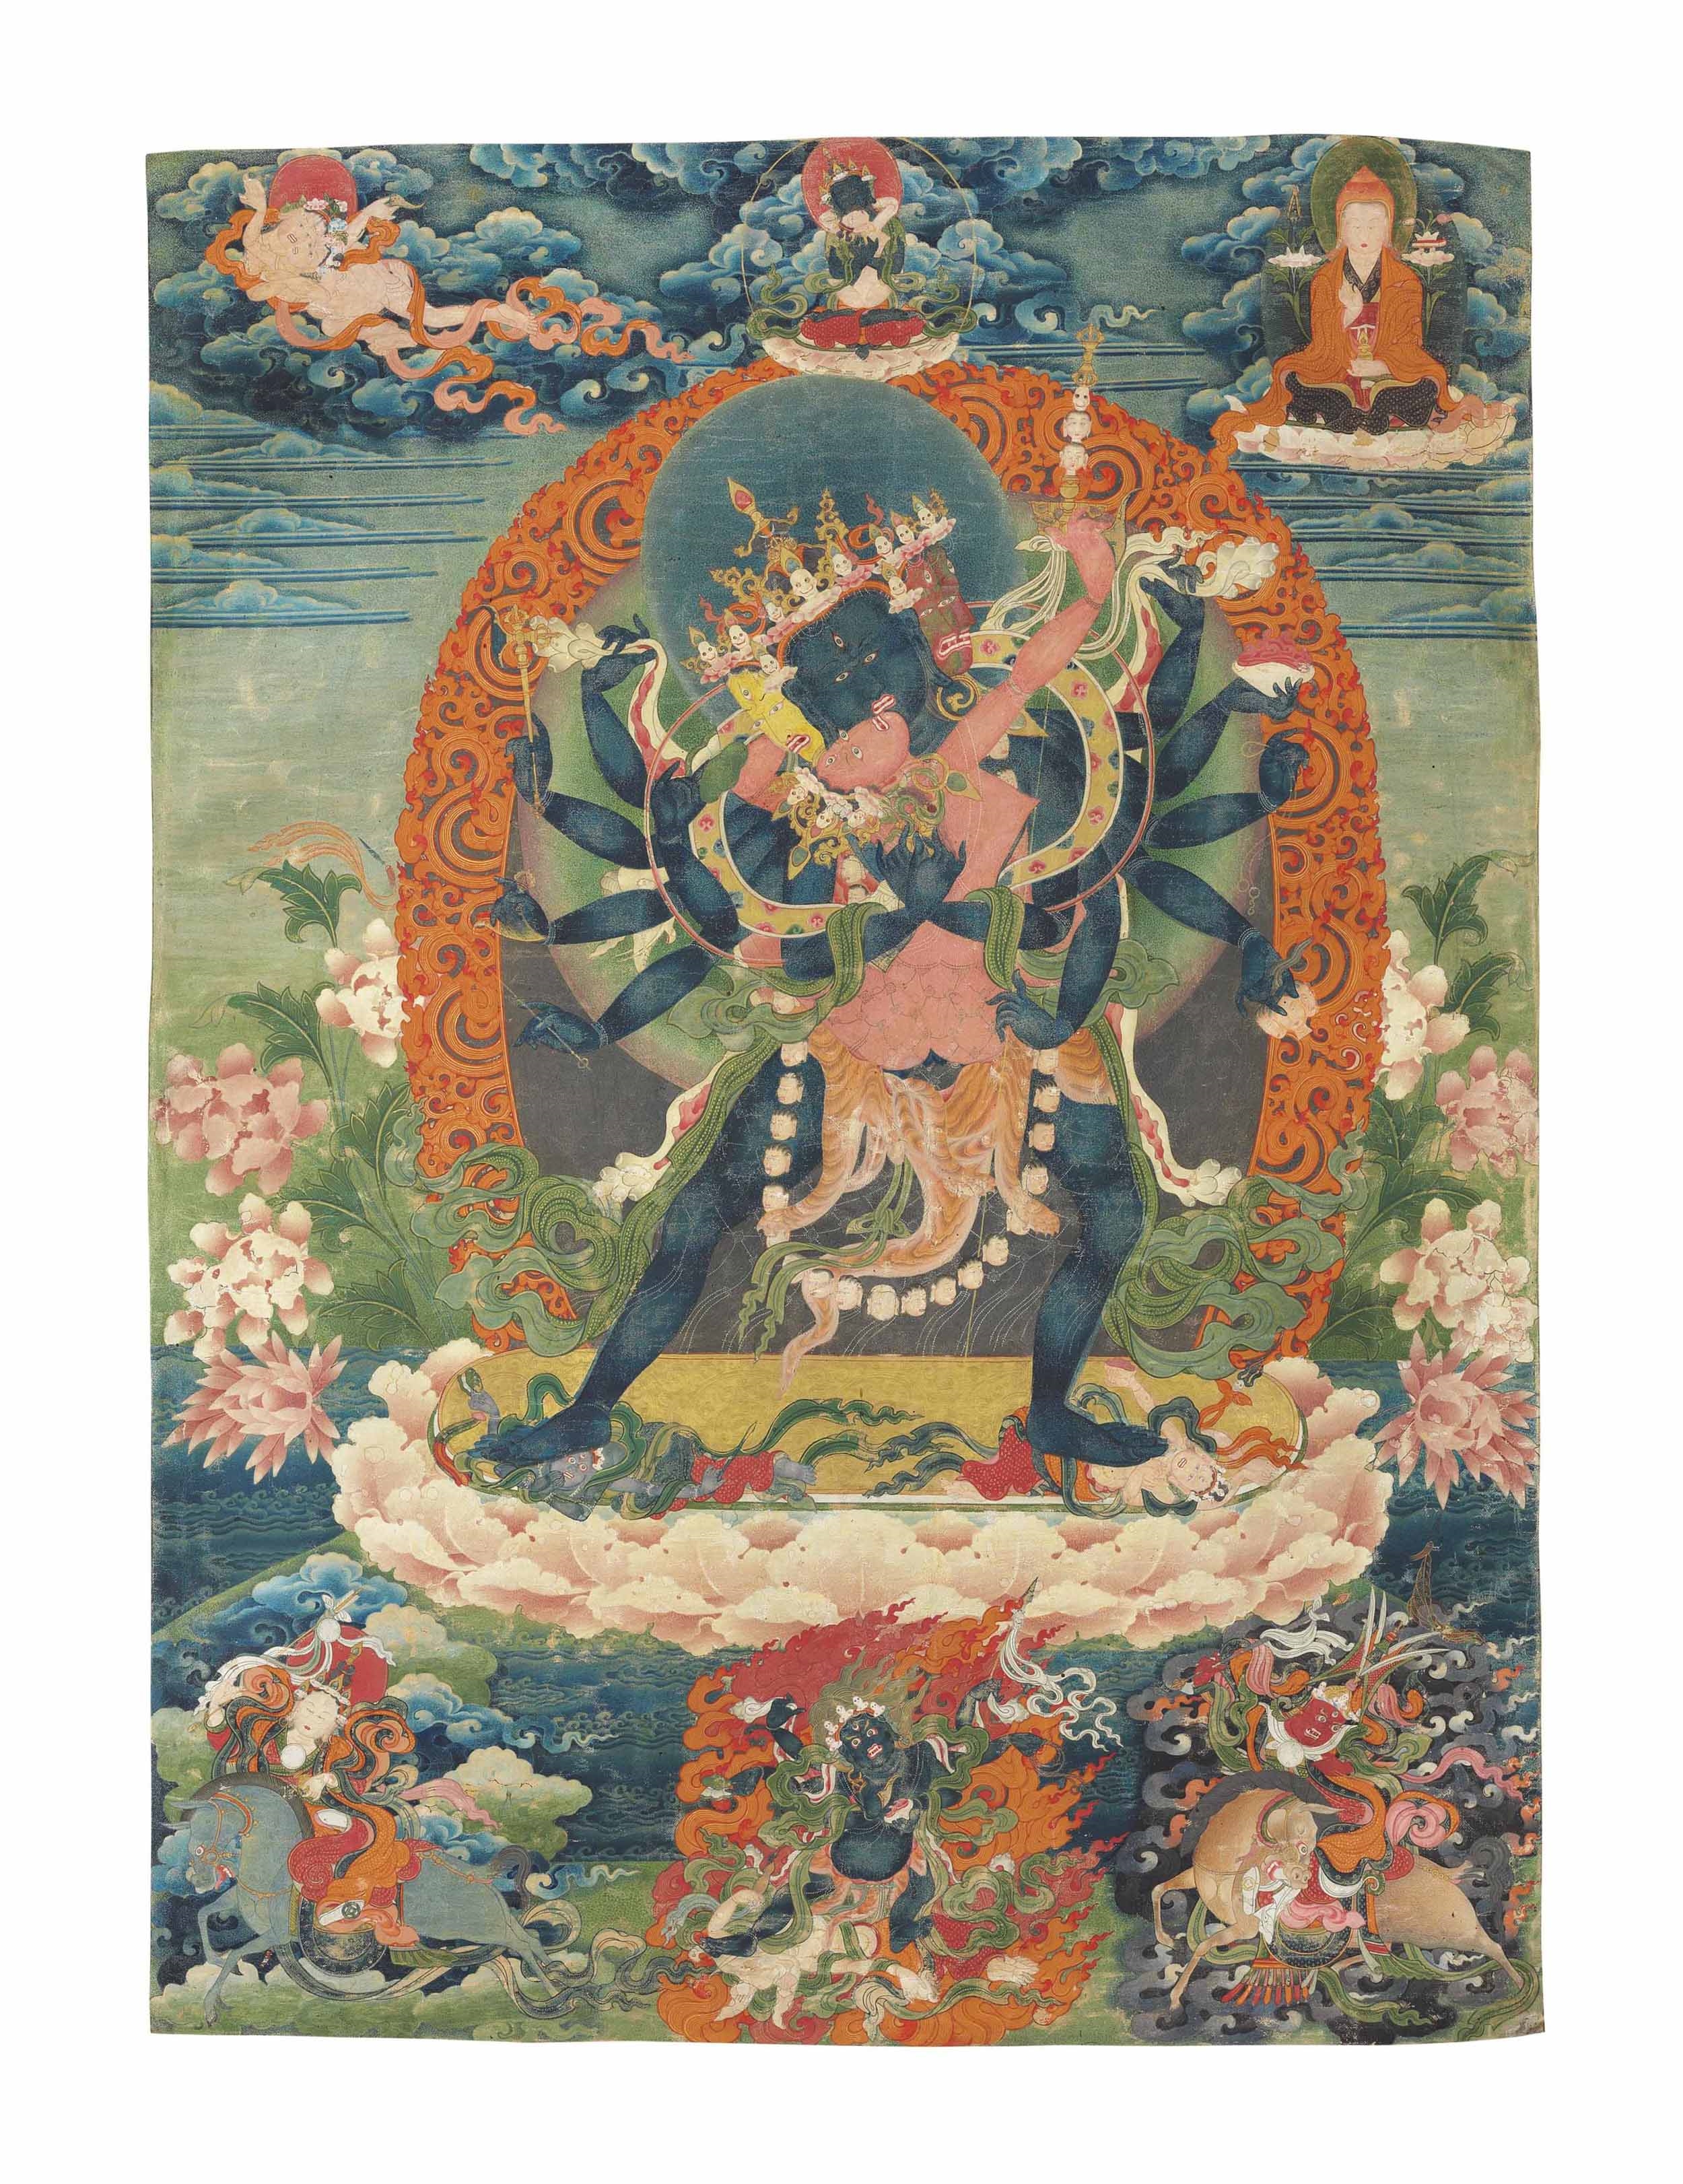 Artwork by Tibetan School, 18th Century, A PAINTING OF CHAKRASAMVARA AND VAJRAVARAHI, Made of PAINTING